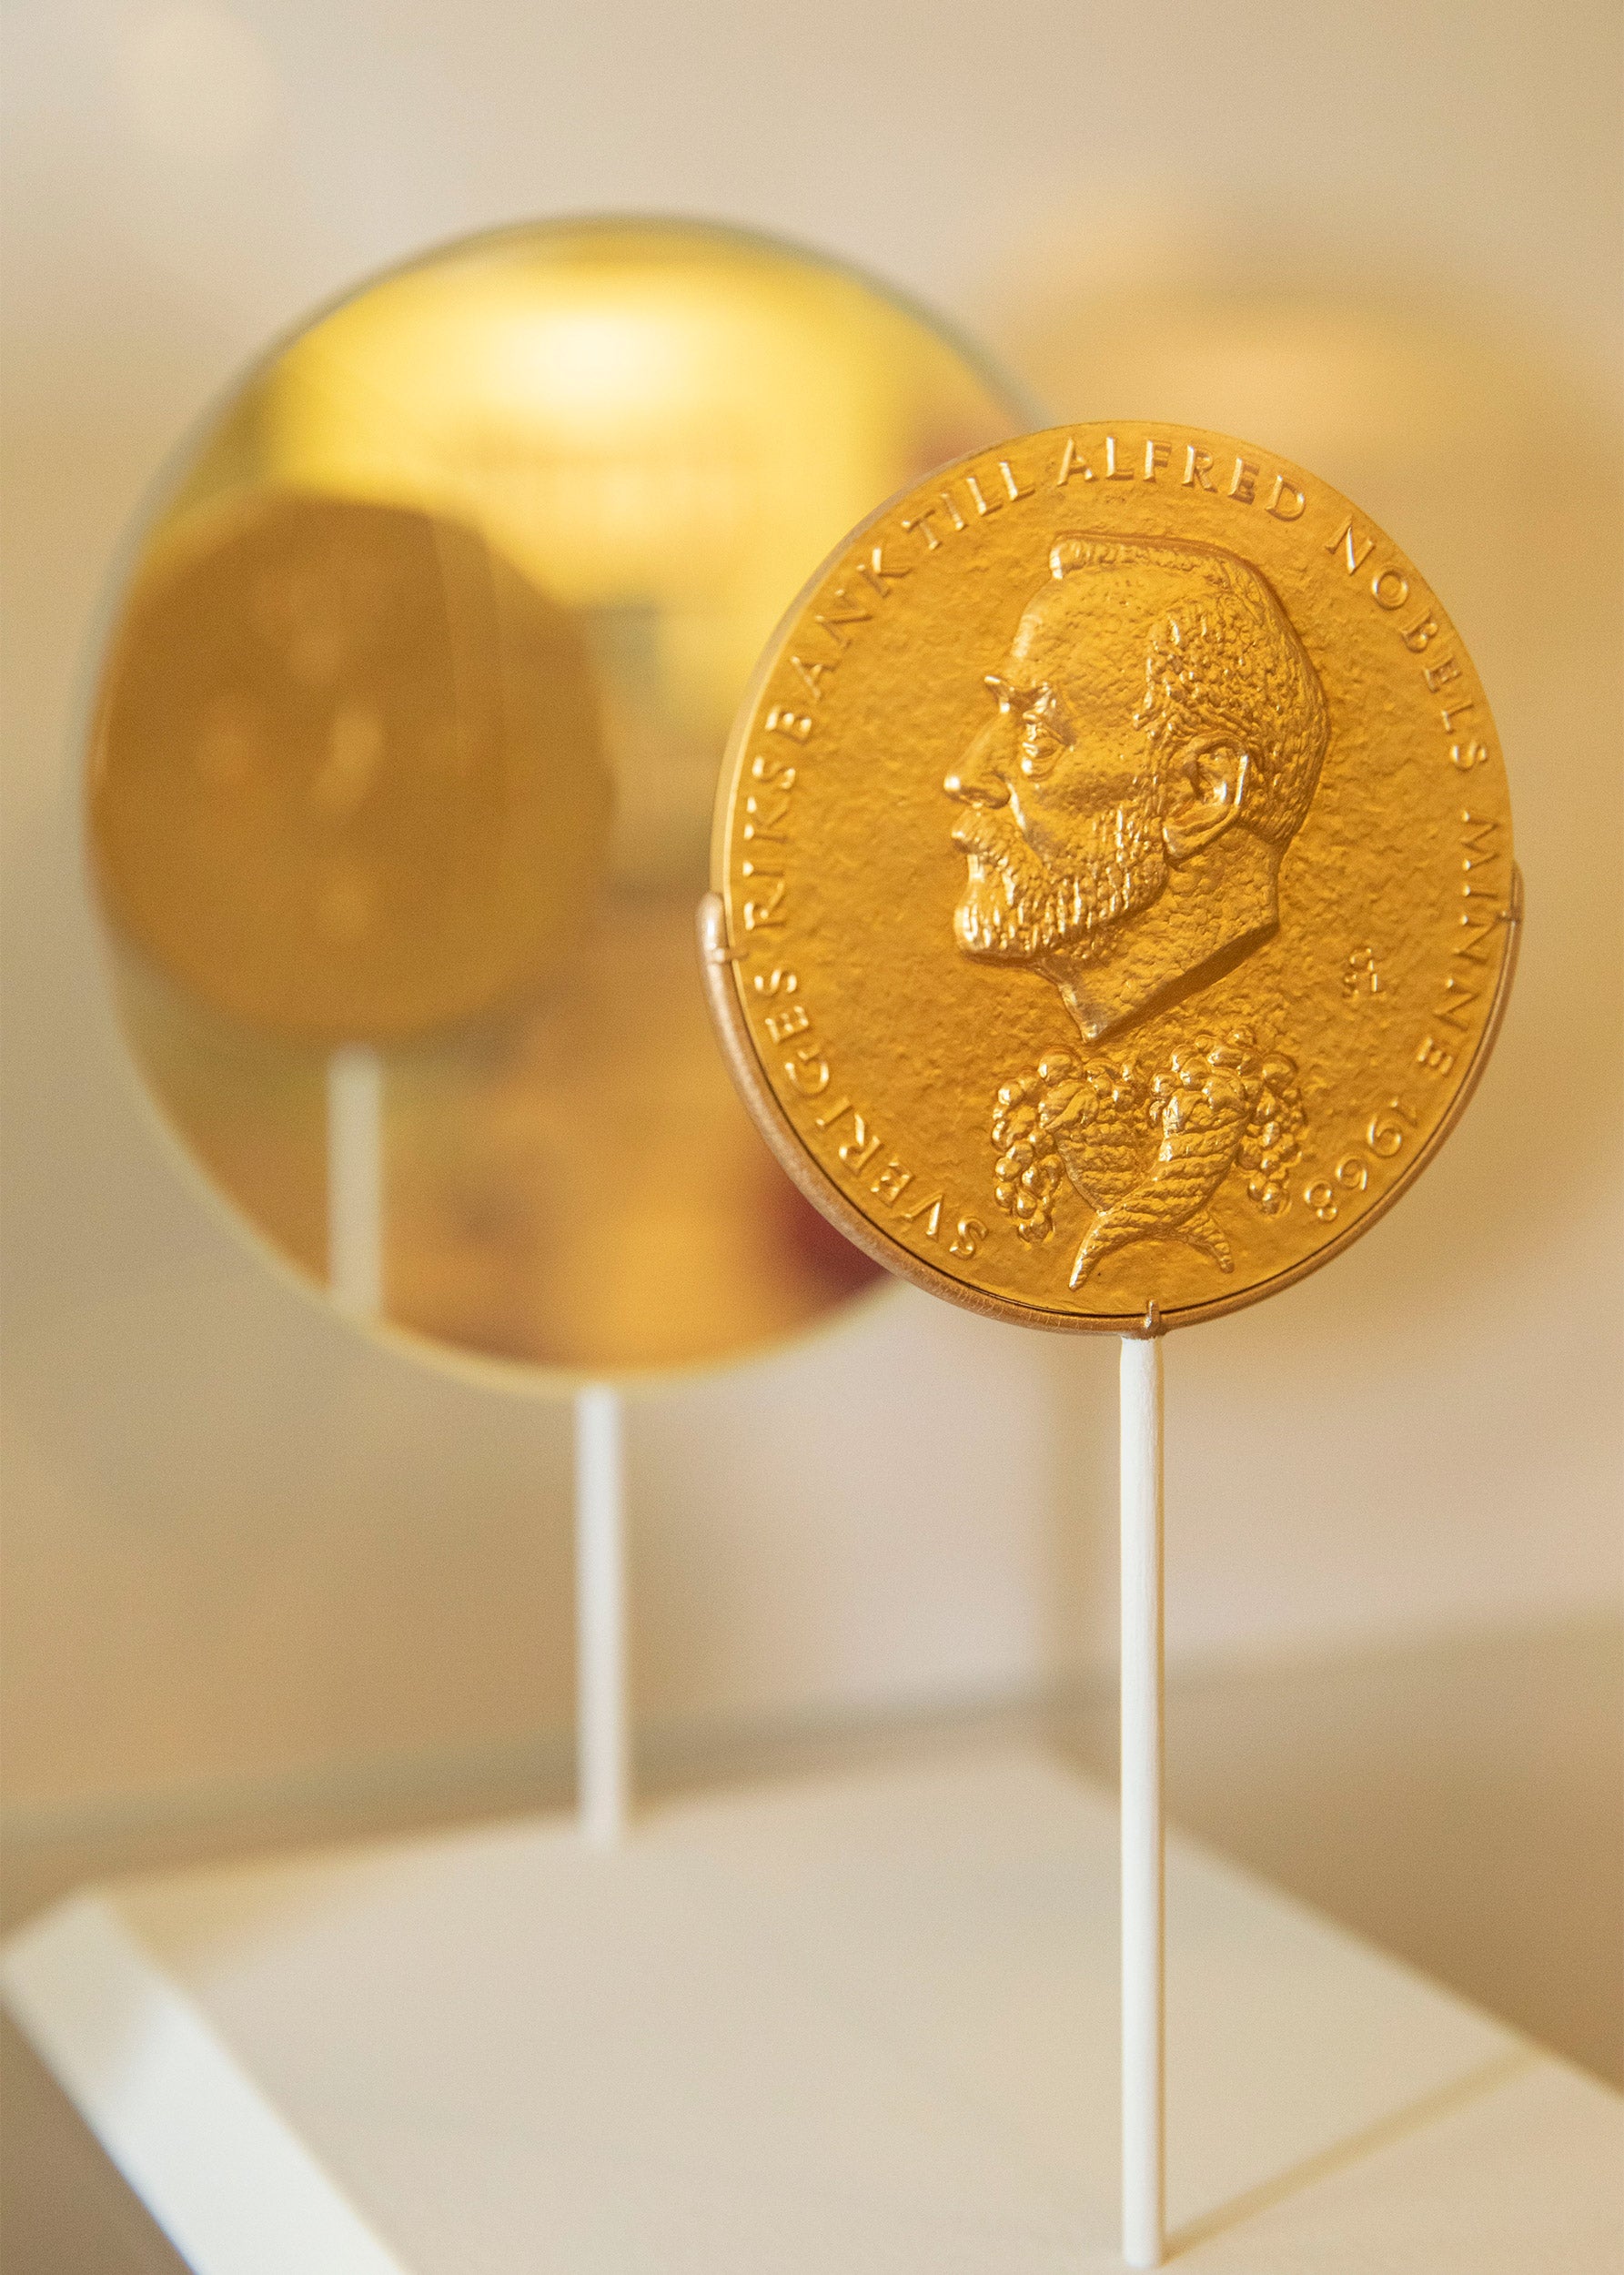 Robert Merton’s Nobel Medal